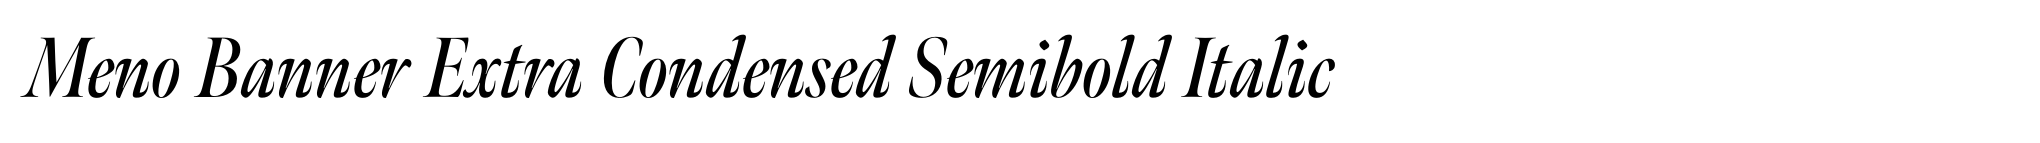 Meno Banner Extra Condensed Semibold Italic image